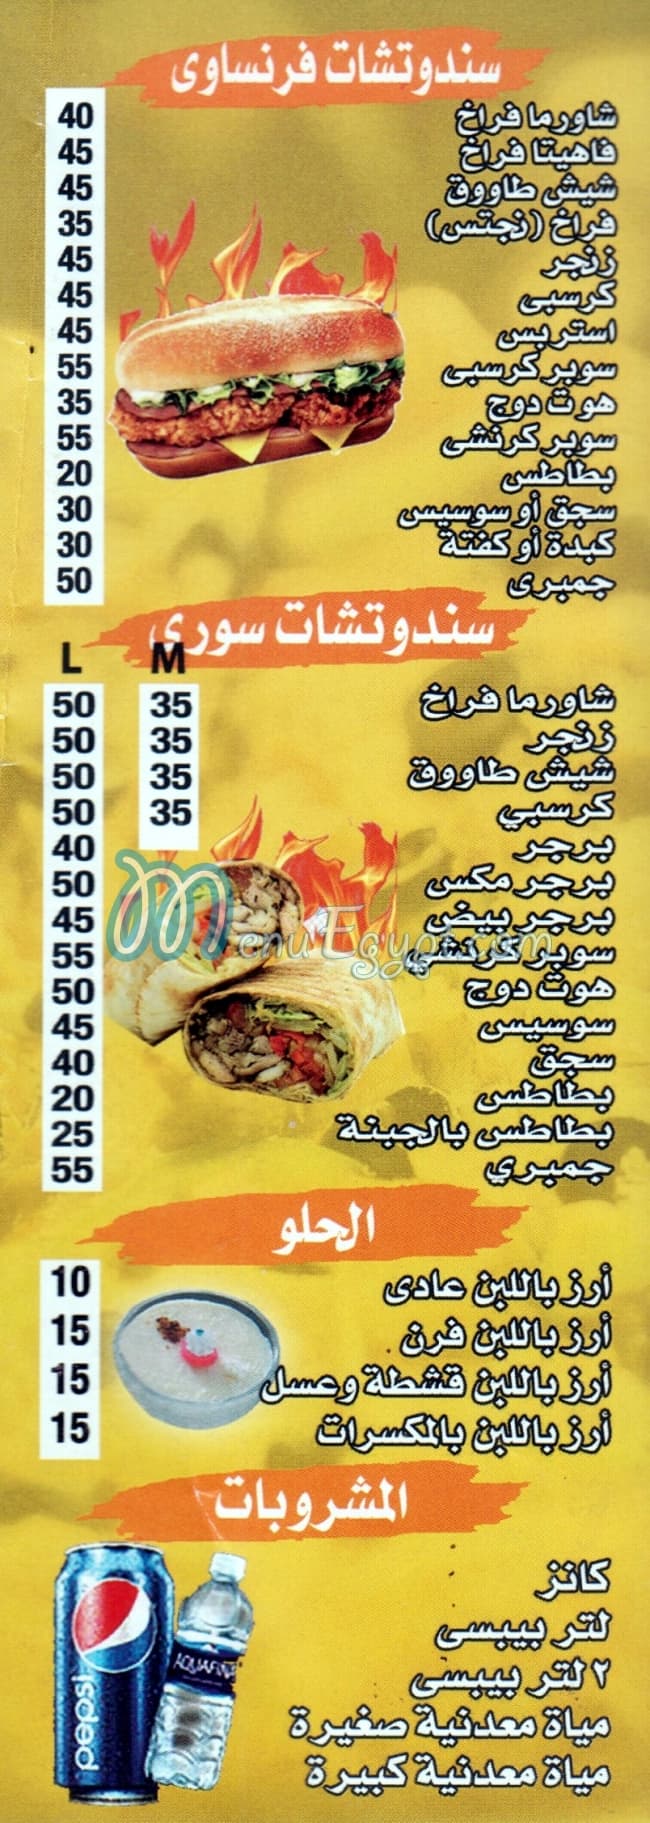 BAHR menu Egypt